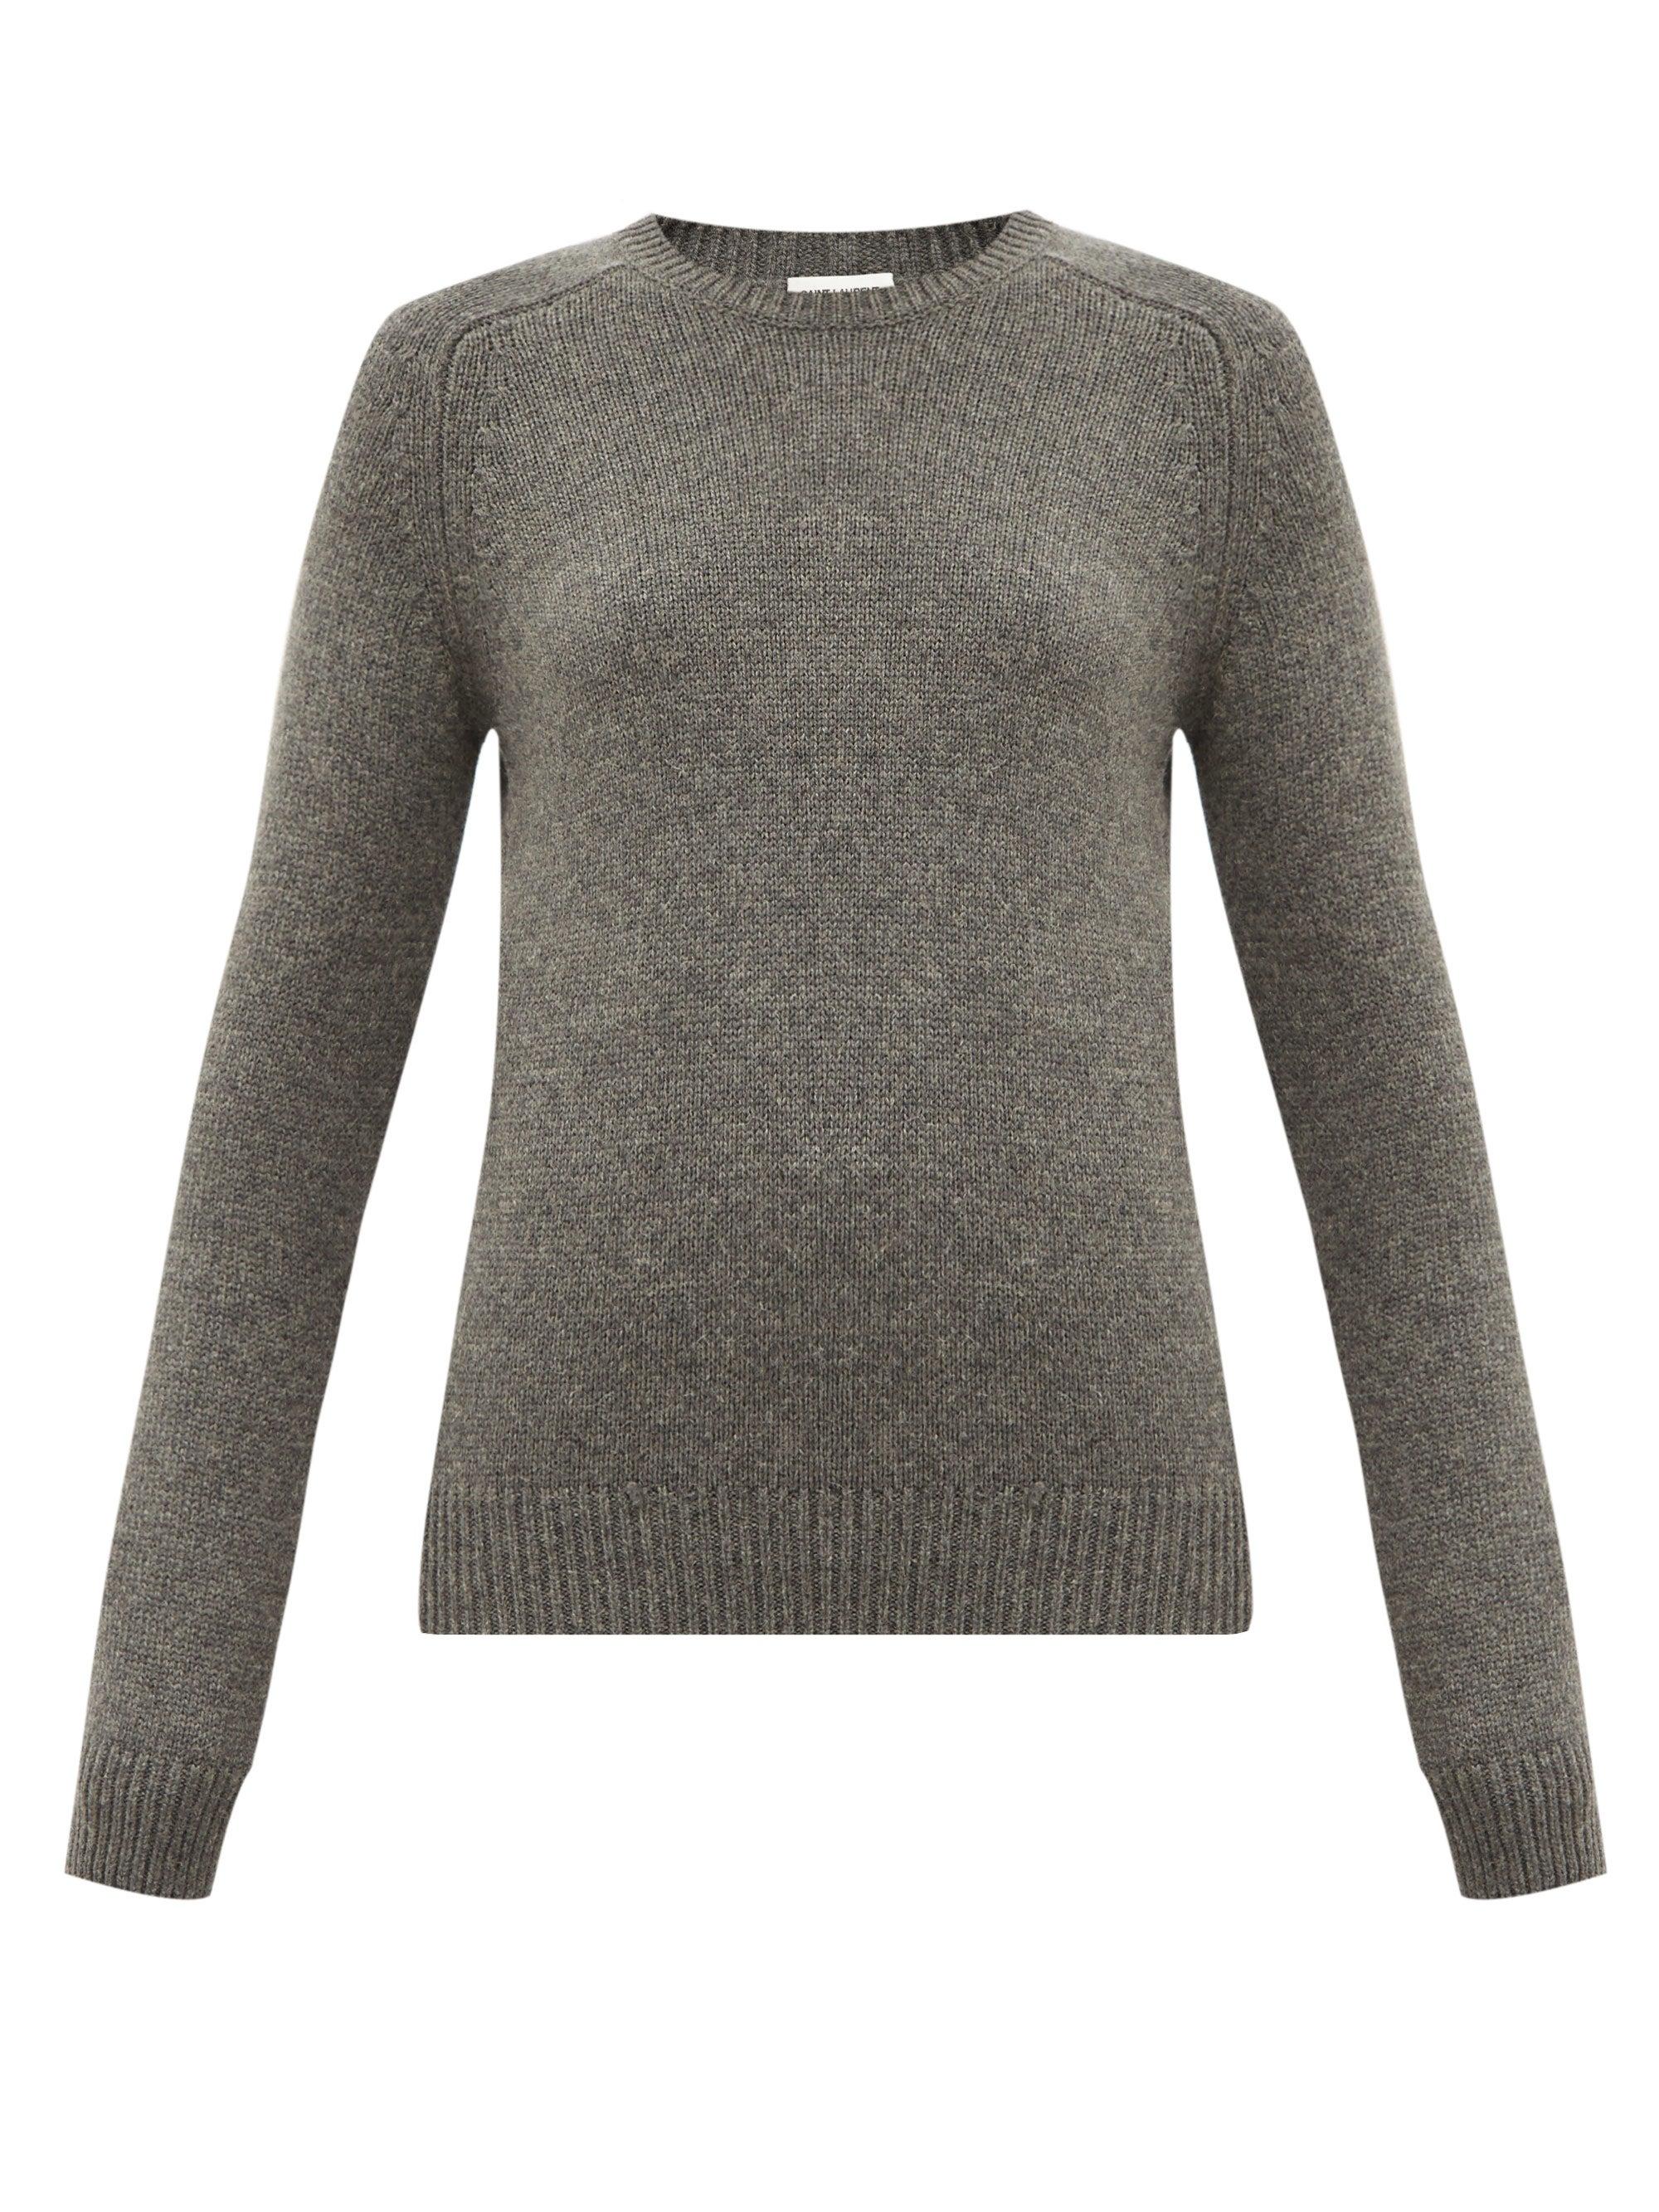 Saint Laurent Round-neck Camel-hair Sweater in Grey (Gray) - Lyst